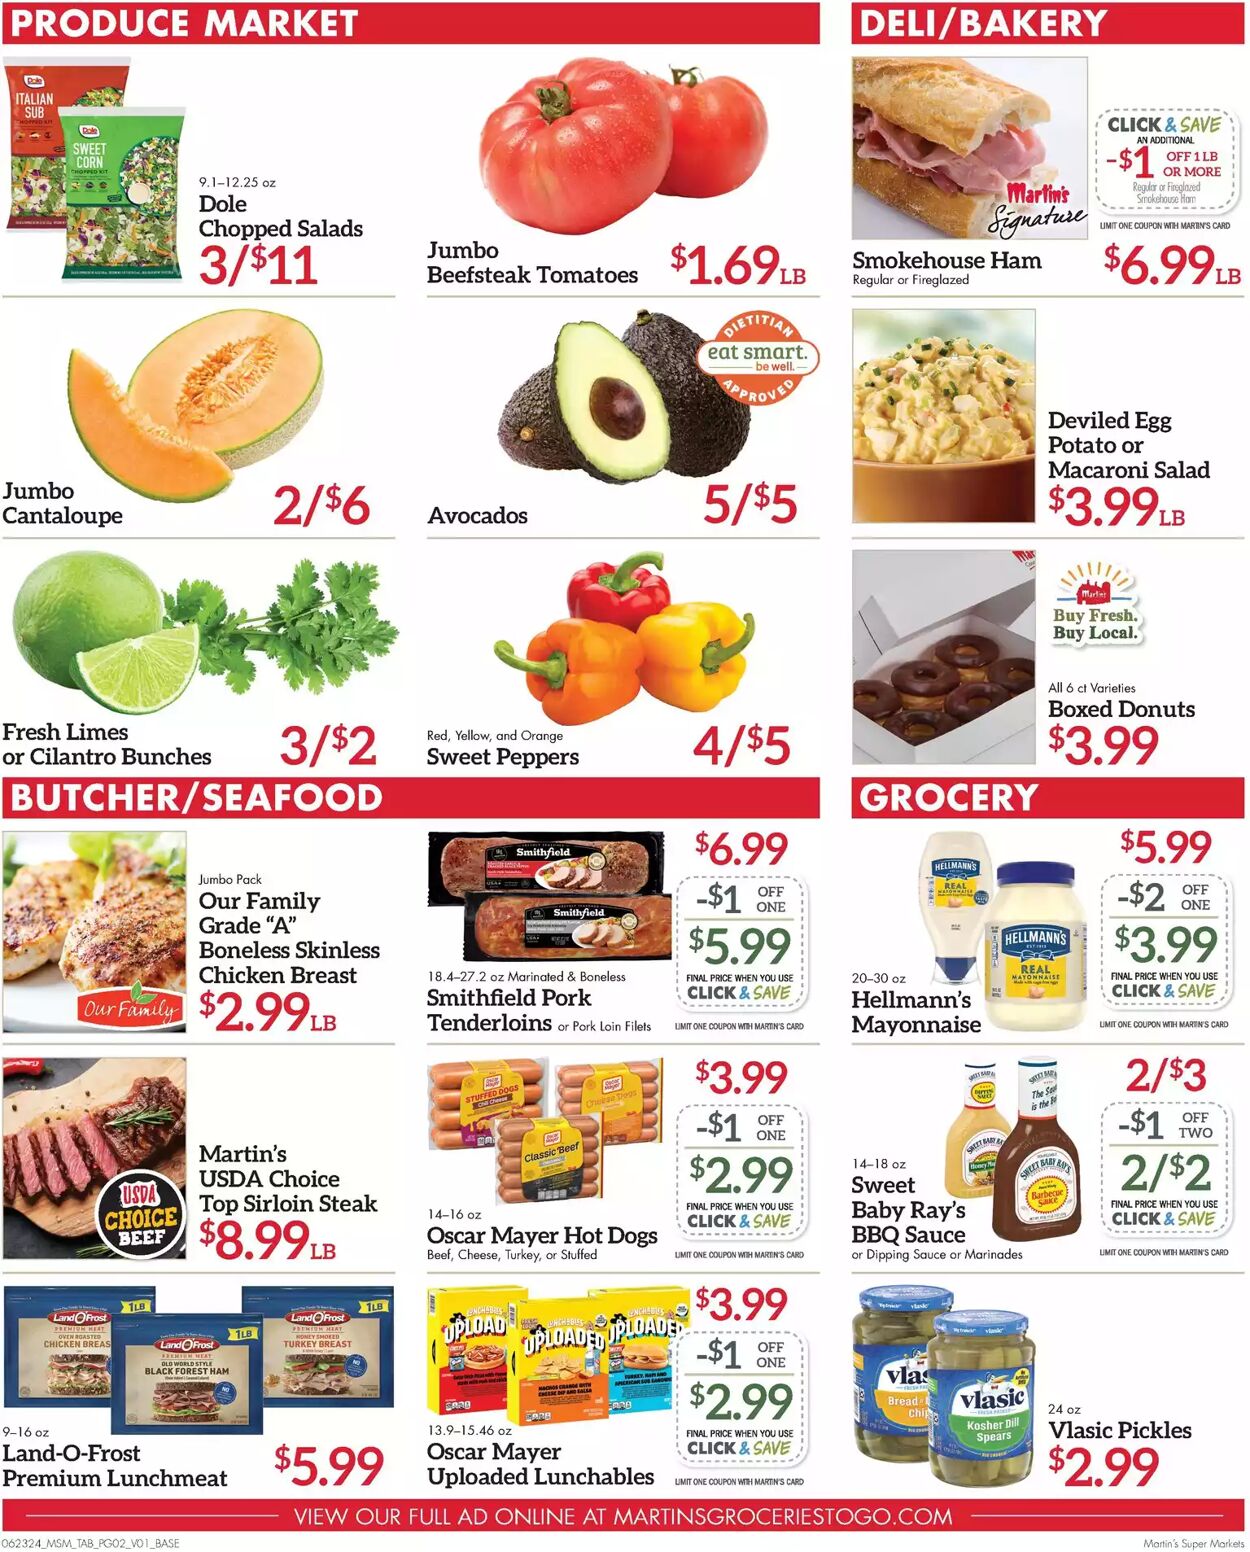 Weekly ad Martin's Supermarkets 06/23/2024 - 06/29/2024